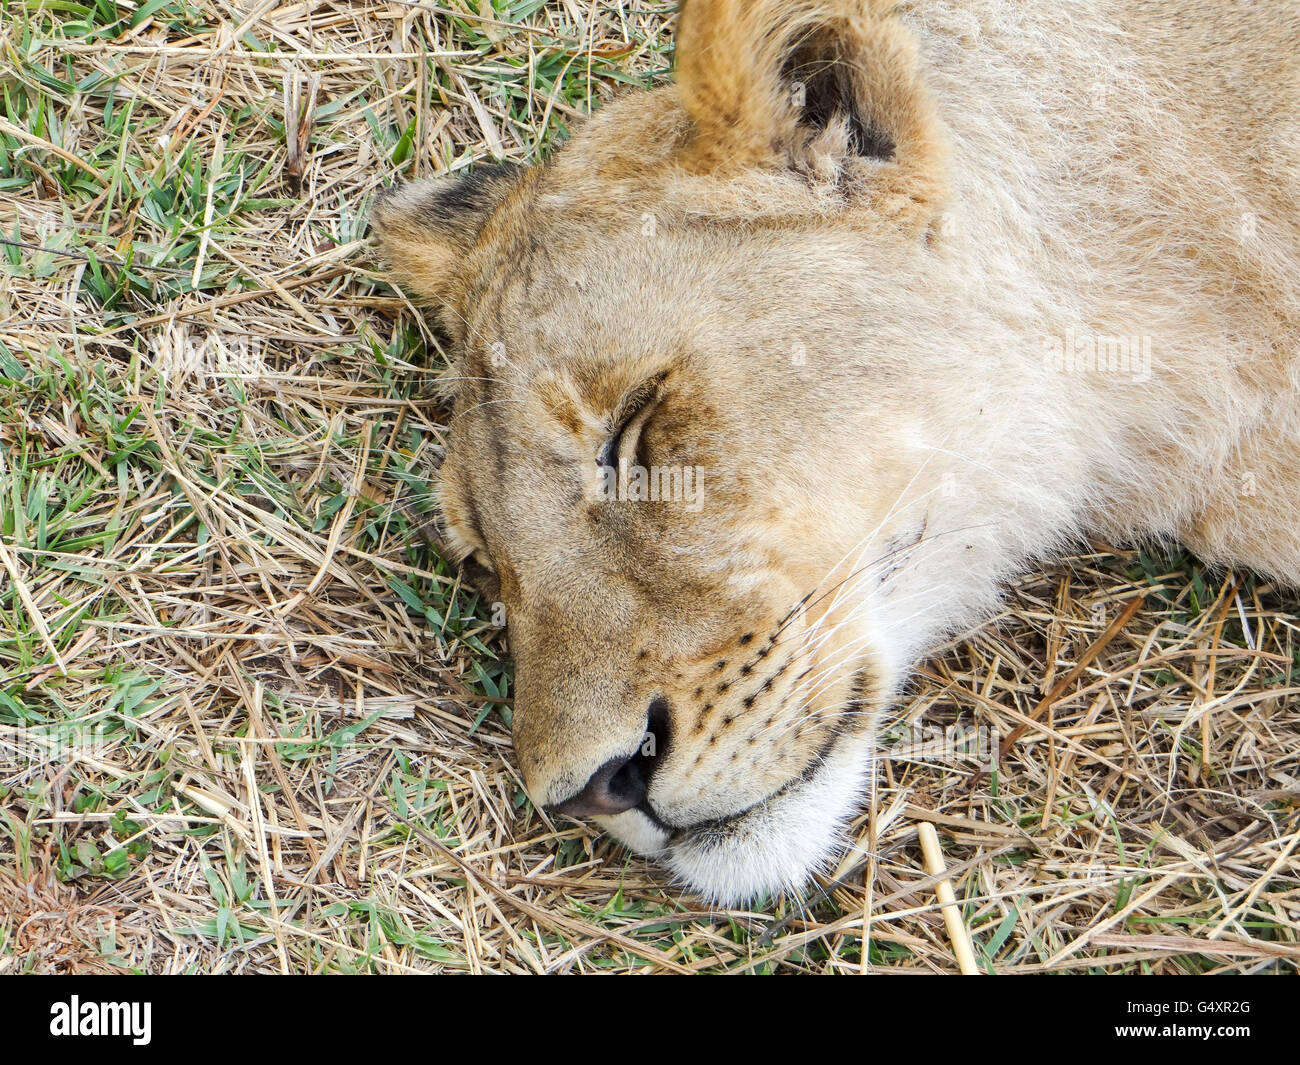 Zimbabwe, Matabeleland North, Hwange, Victoria Falls, On walking safari, close-up of a lioness Stock Photo